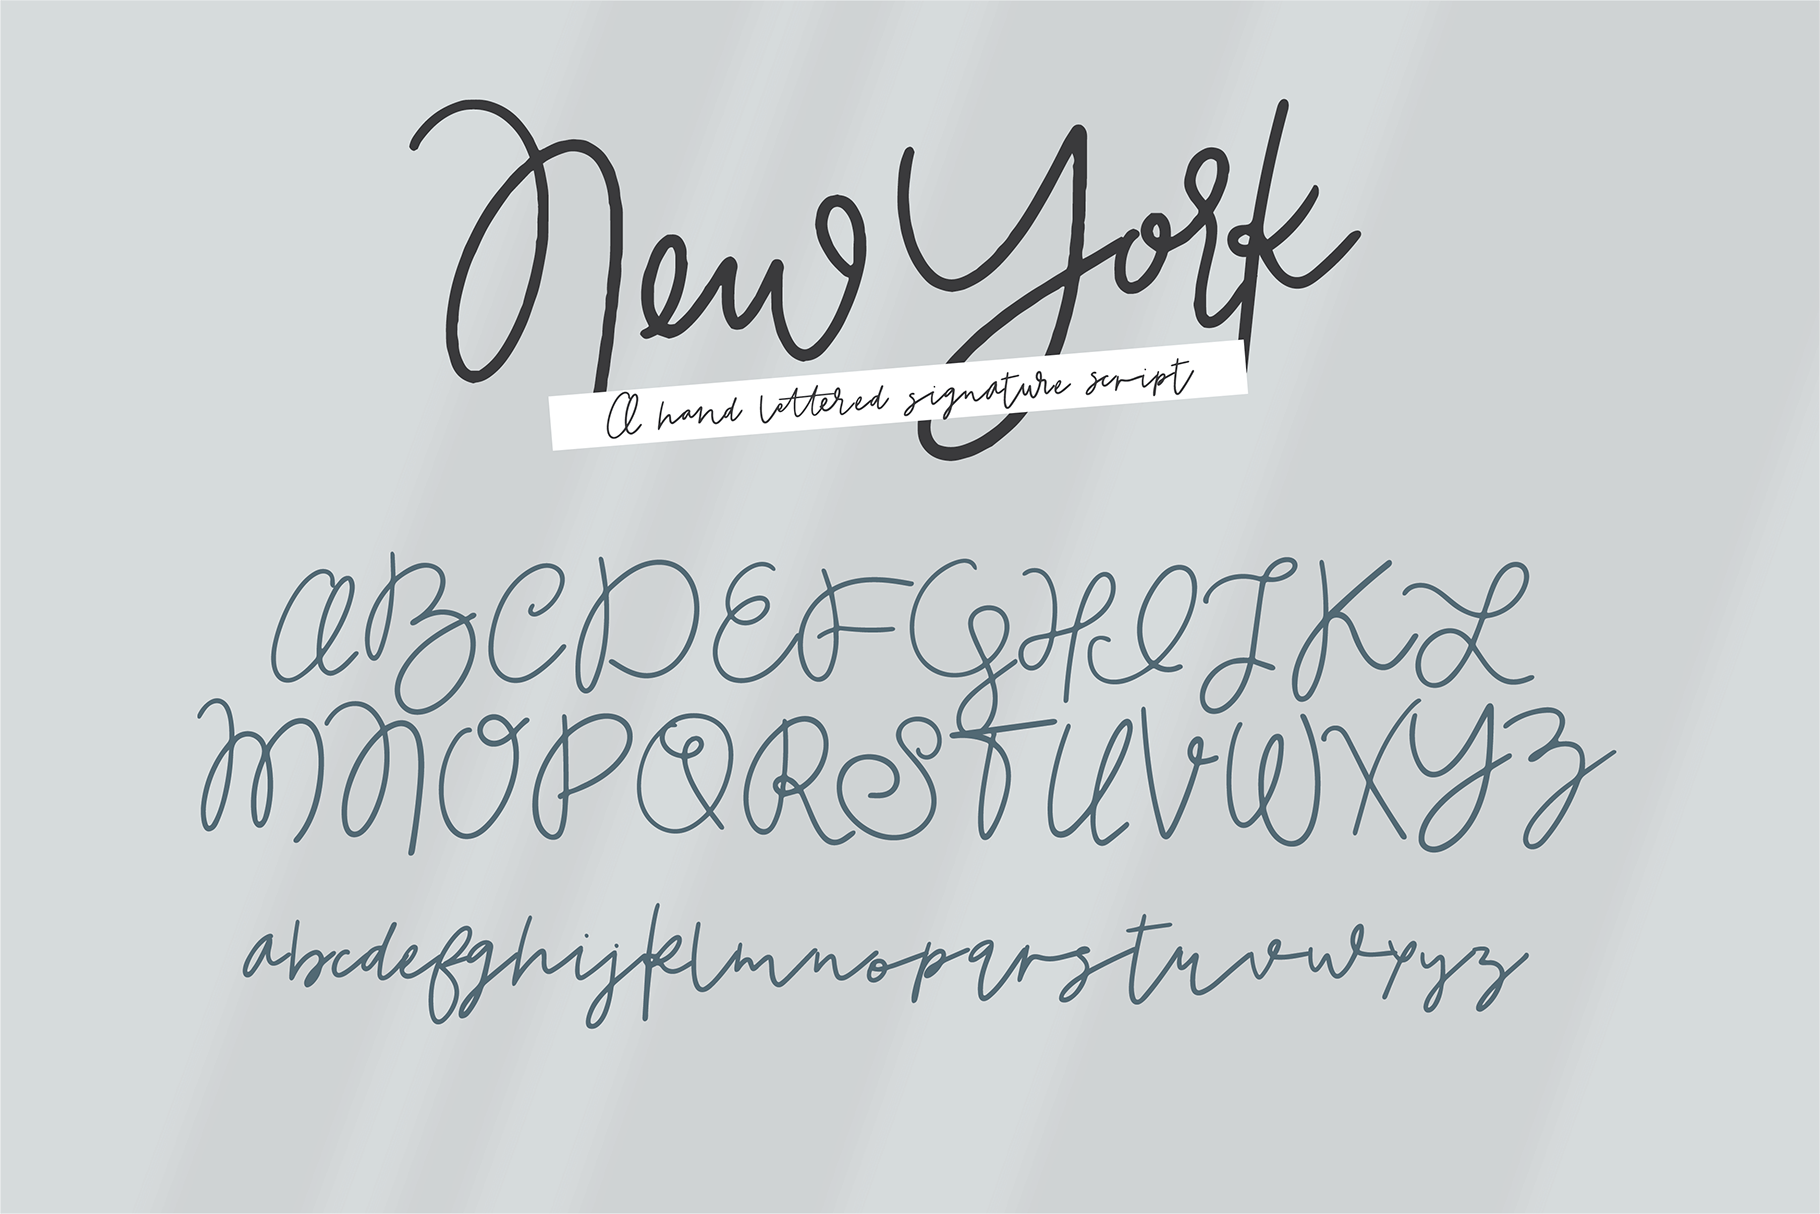 https://media1.thehungryjpeg.com/thumbs2/ori_3678423_zvcgsgvca5fz0ajlrbrt09gqyiybf7yx7fjhct3h_new-york-a-hand-lettered-signature-script-font.png